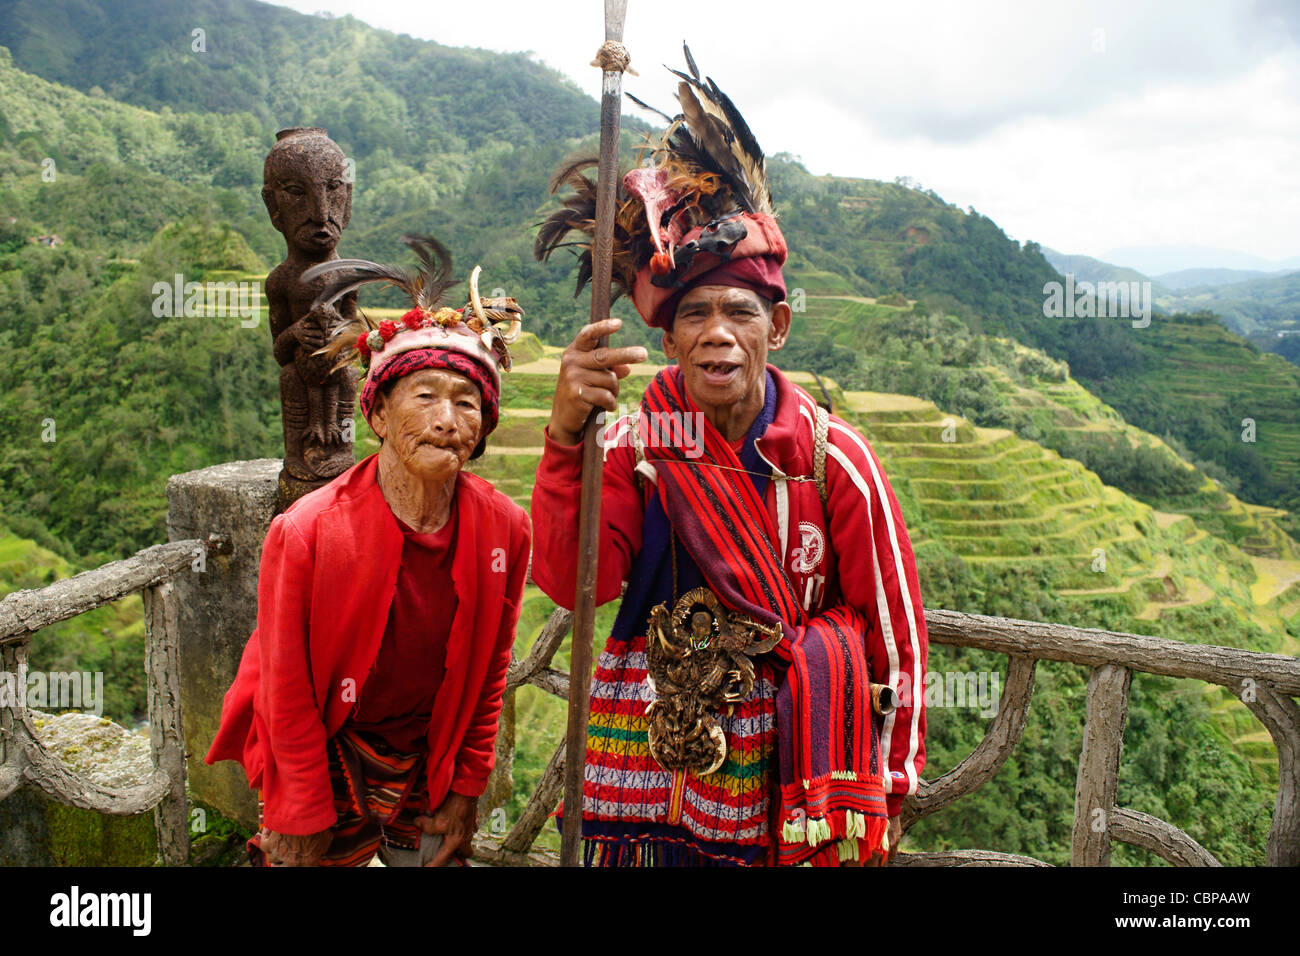 Ifugao tribe people, Banaue Philippines Stock Photo